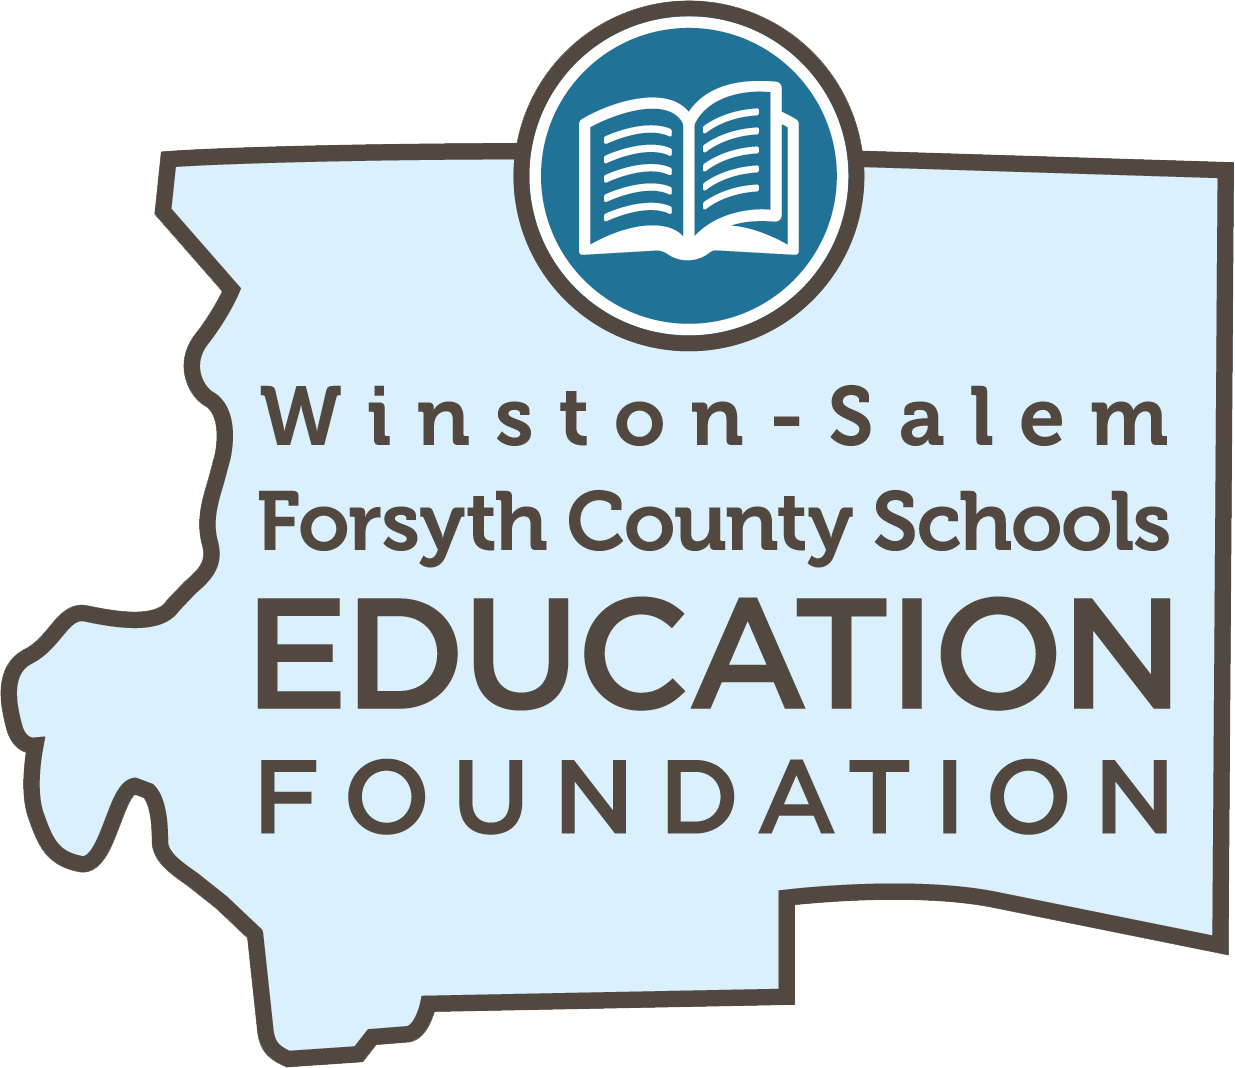 Winston Salem Forsyth County Schools Education Foundation